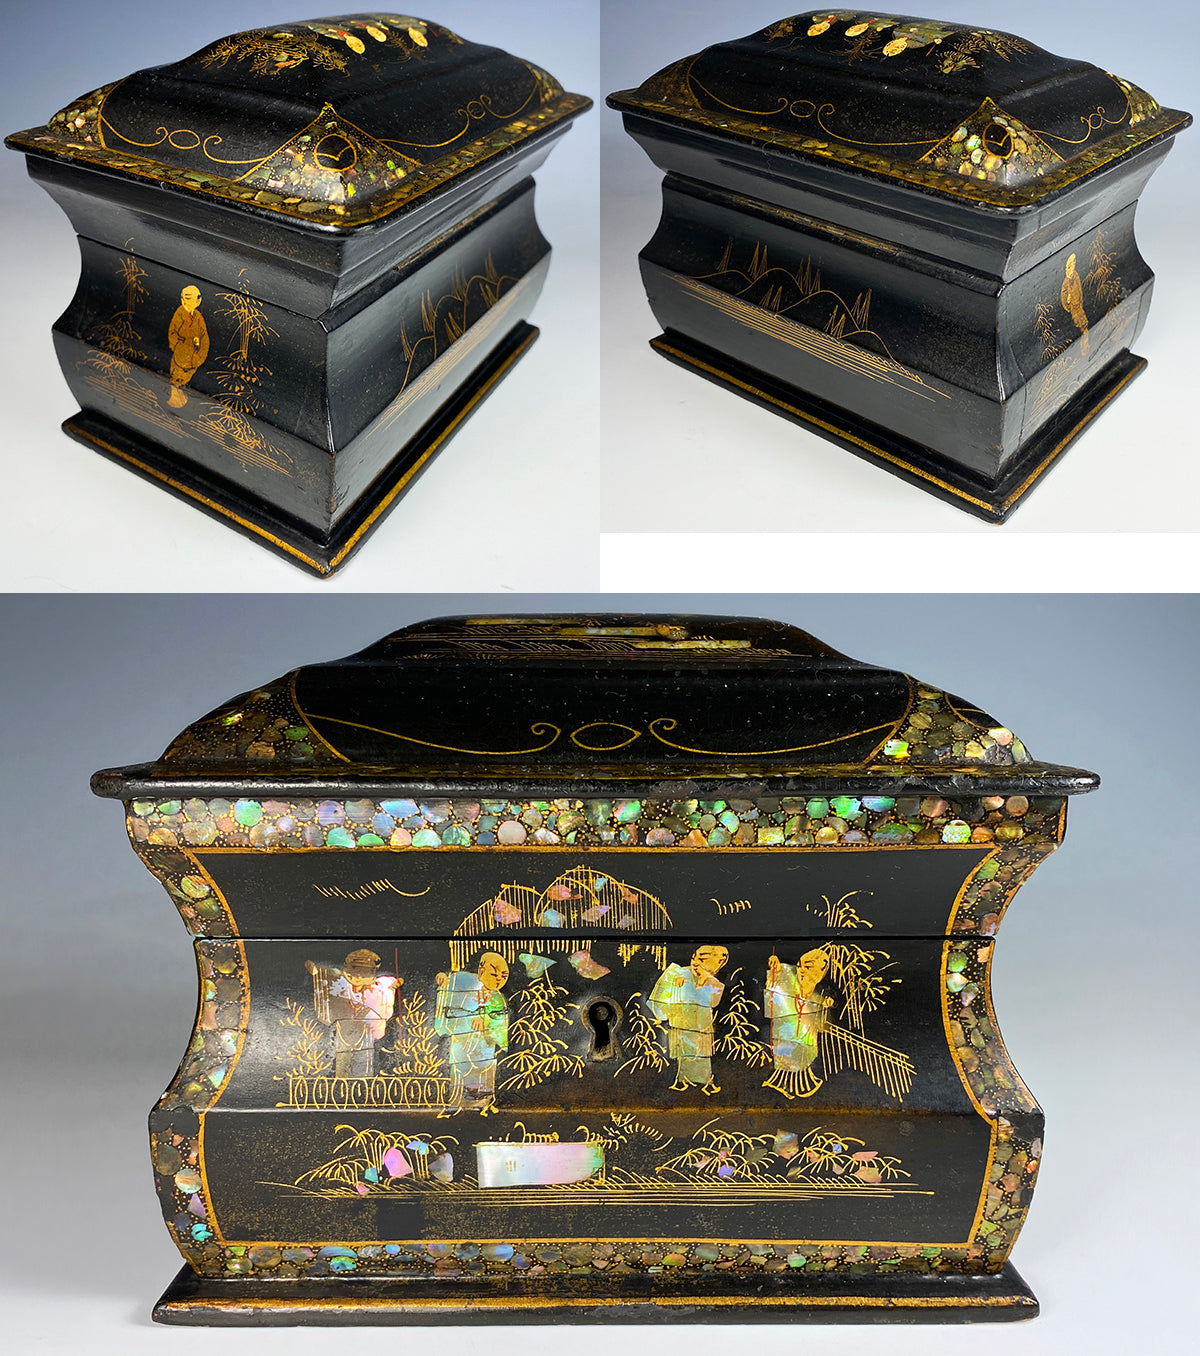 Antique Victorian Era Papier Mâché Jewelry Box, Inlaid Mother of Pearl, Oriental Theme, Monks